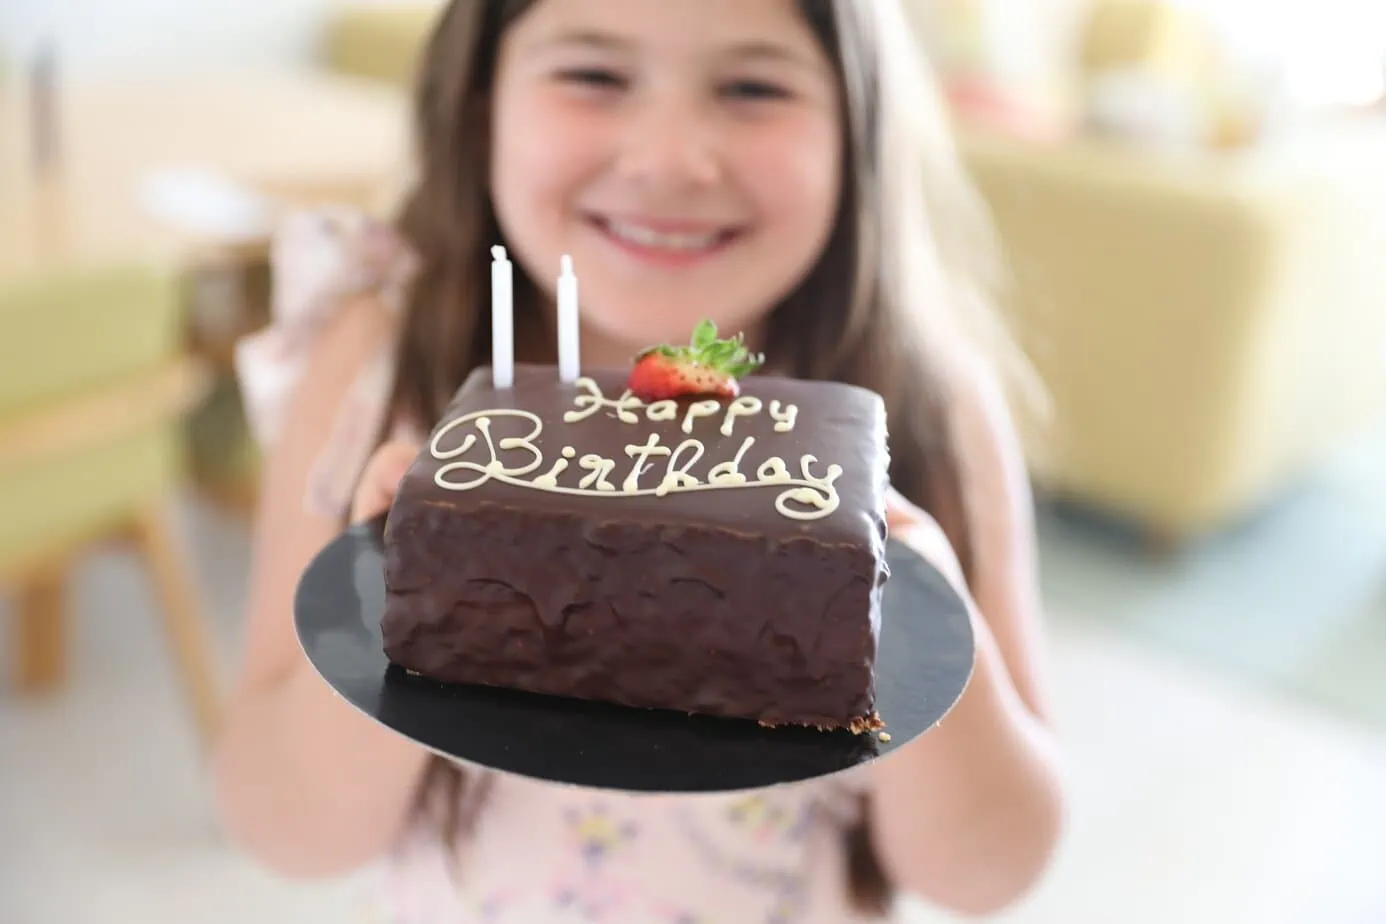 Daughter holding up piece of chocolate birthday cake